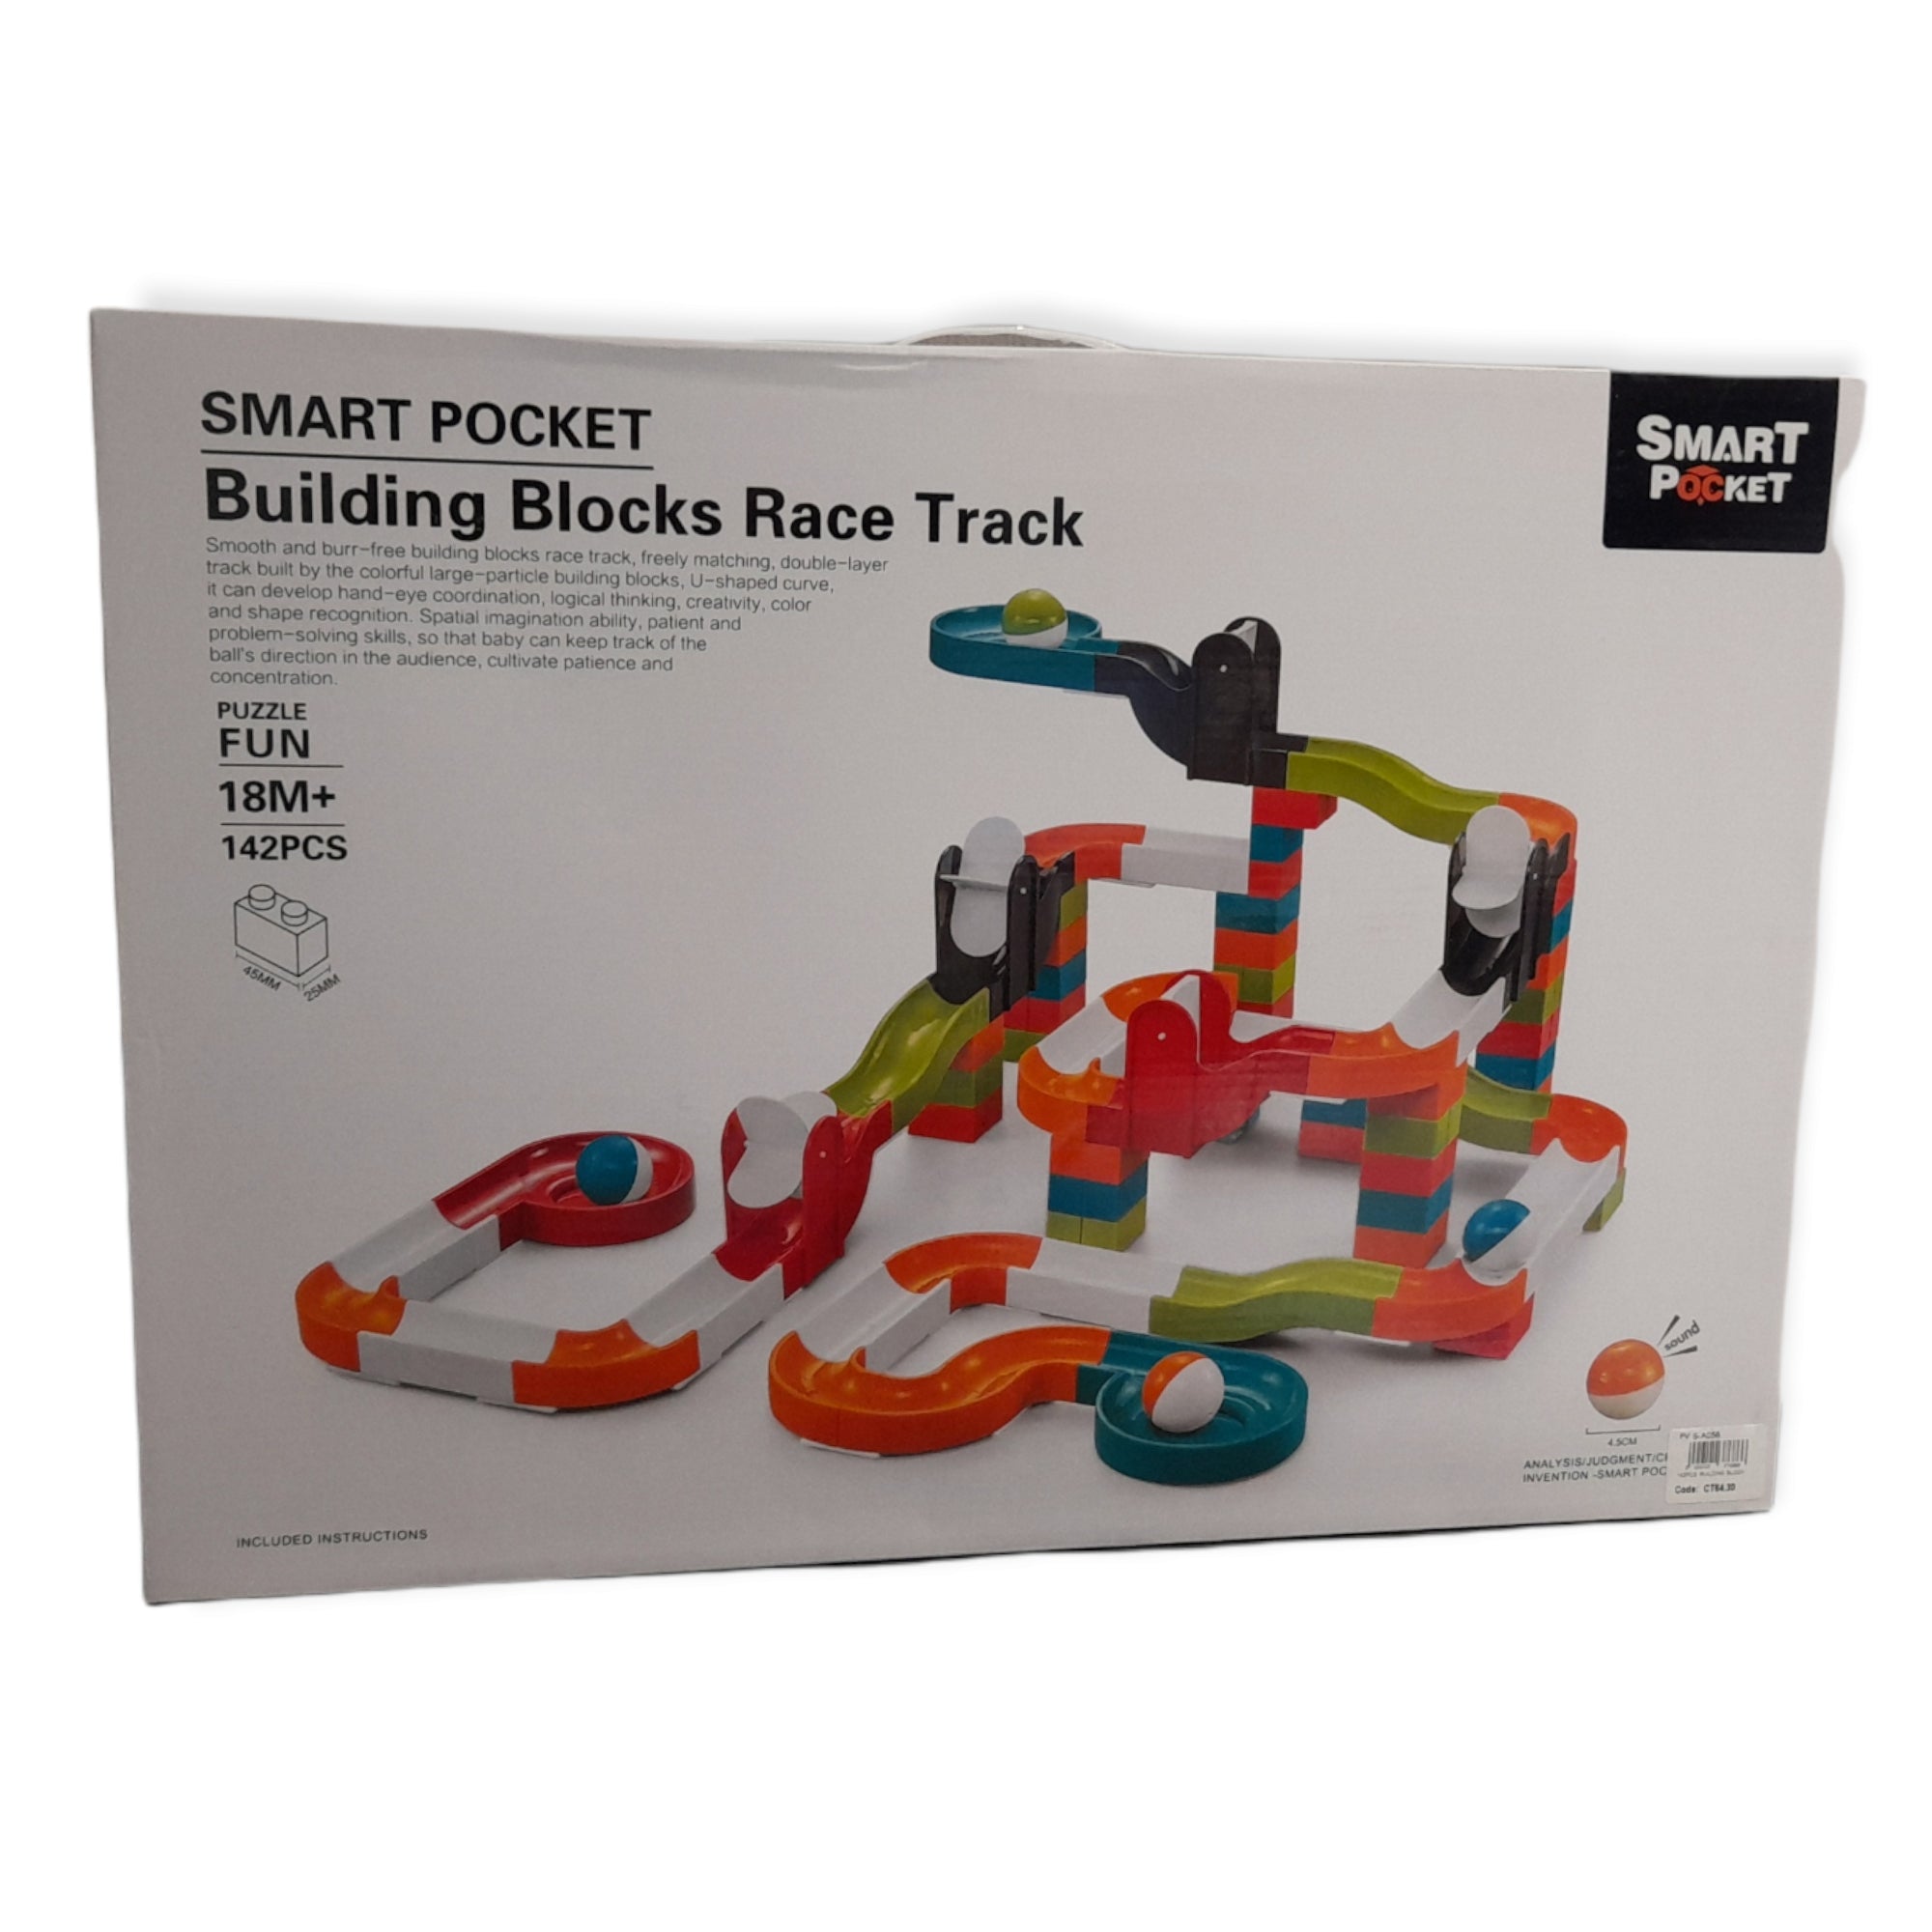 Smart Pocket - Building Blocks Race Track